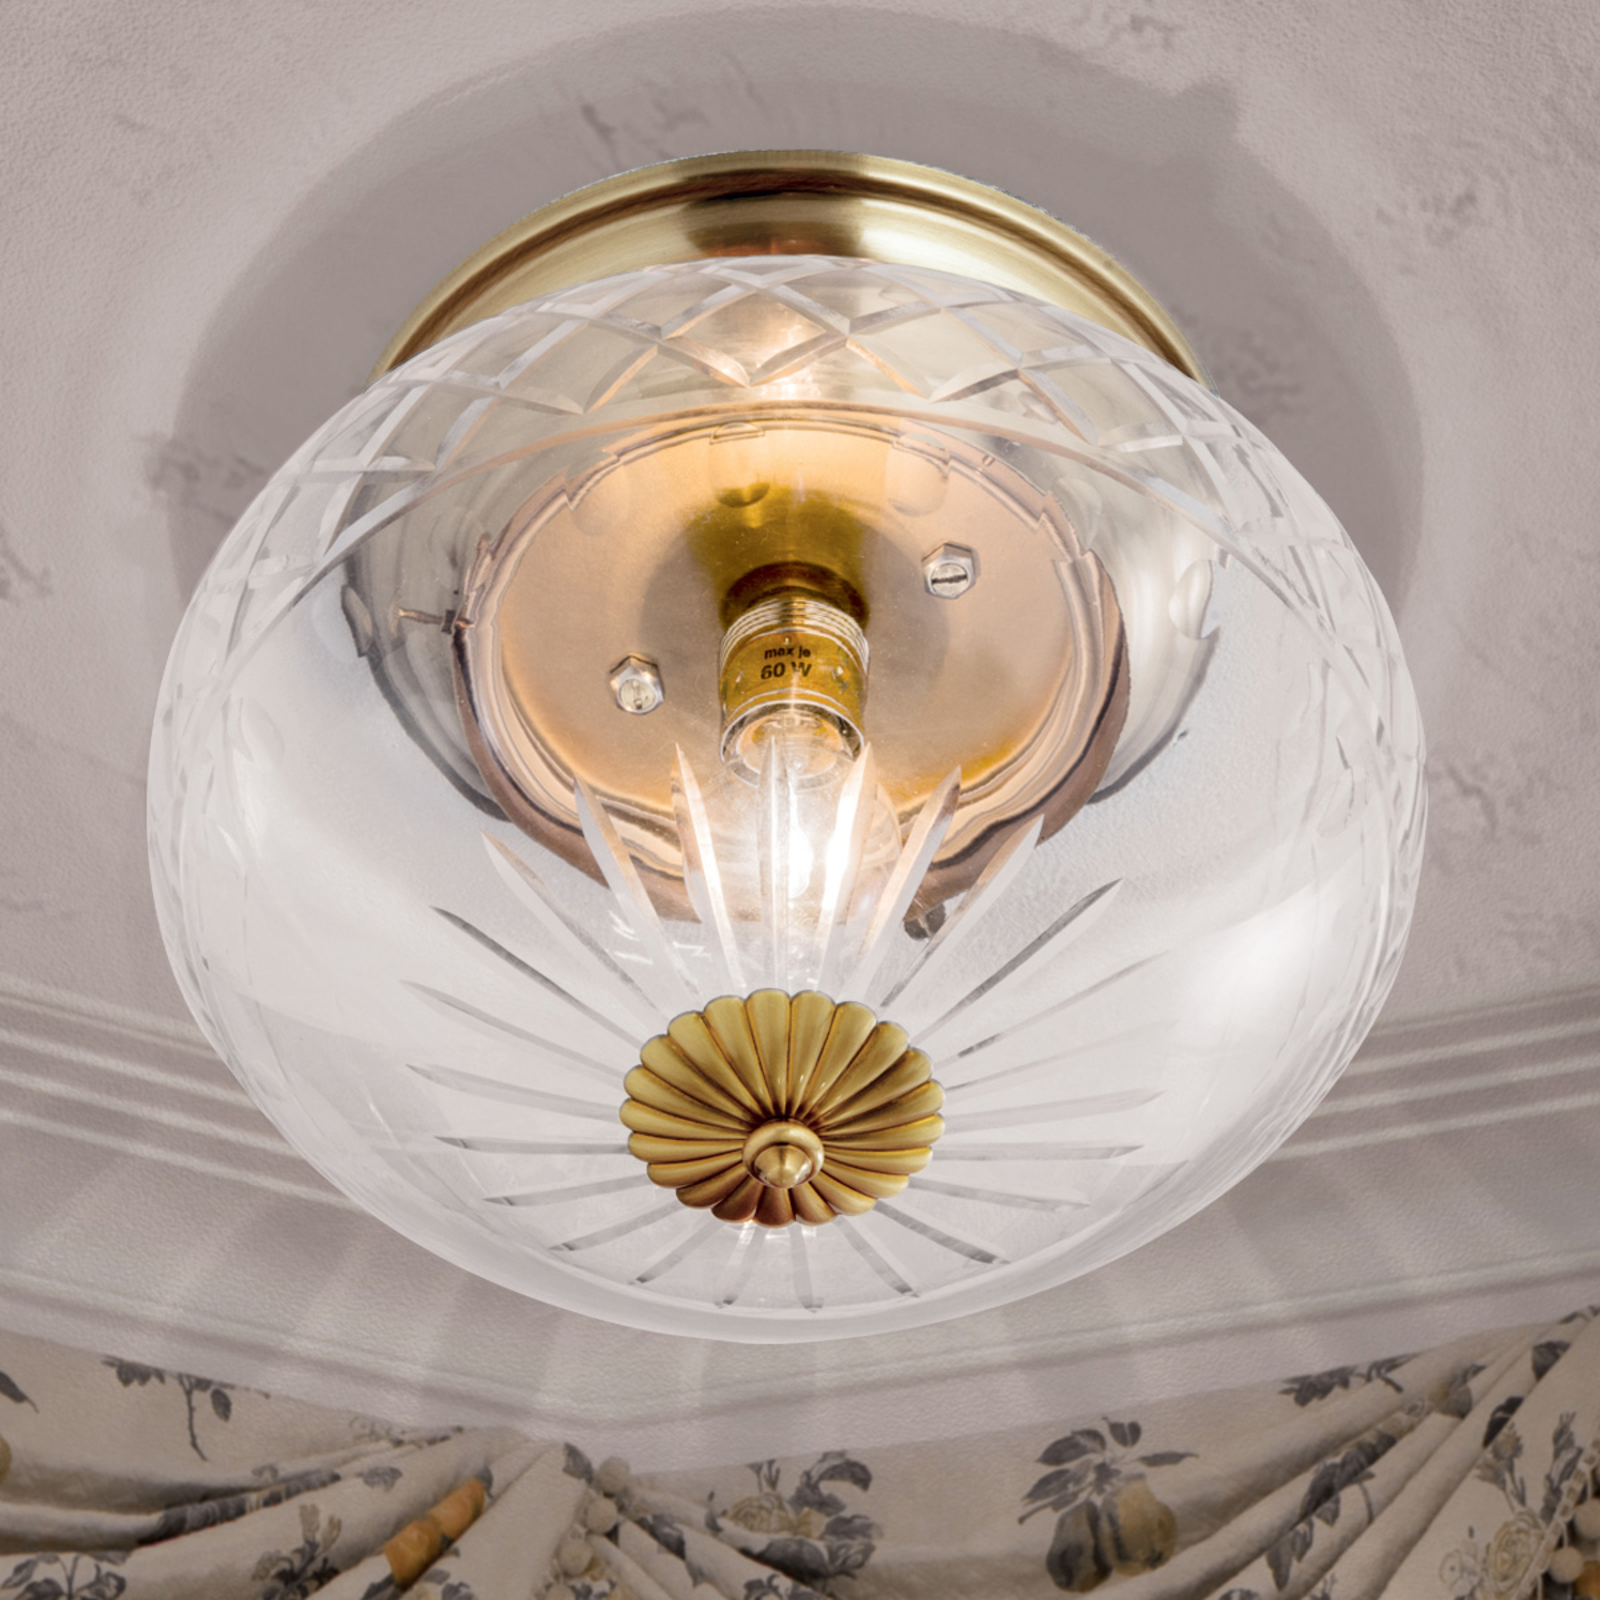 Handgeslepen plafondlamp ENNA, diameter 31 cm